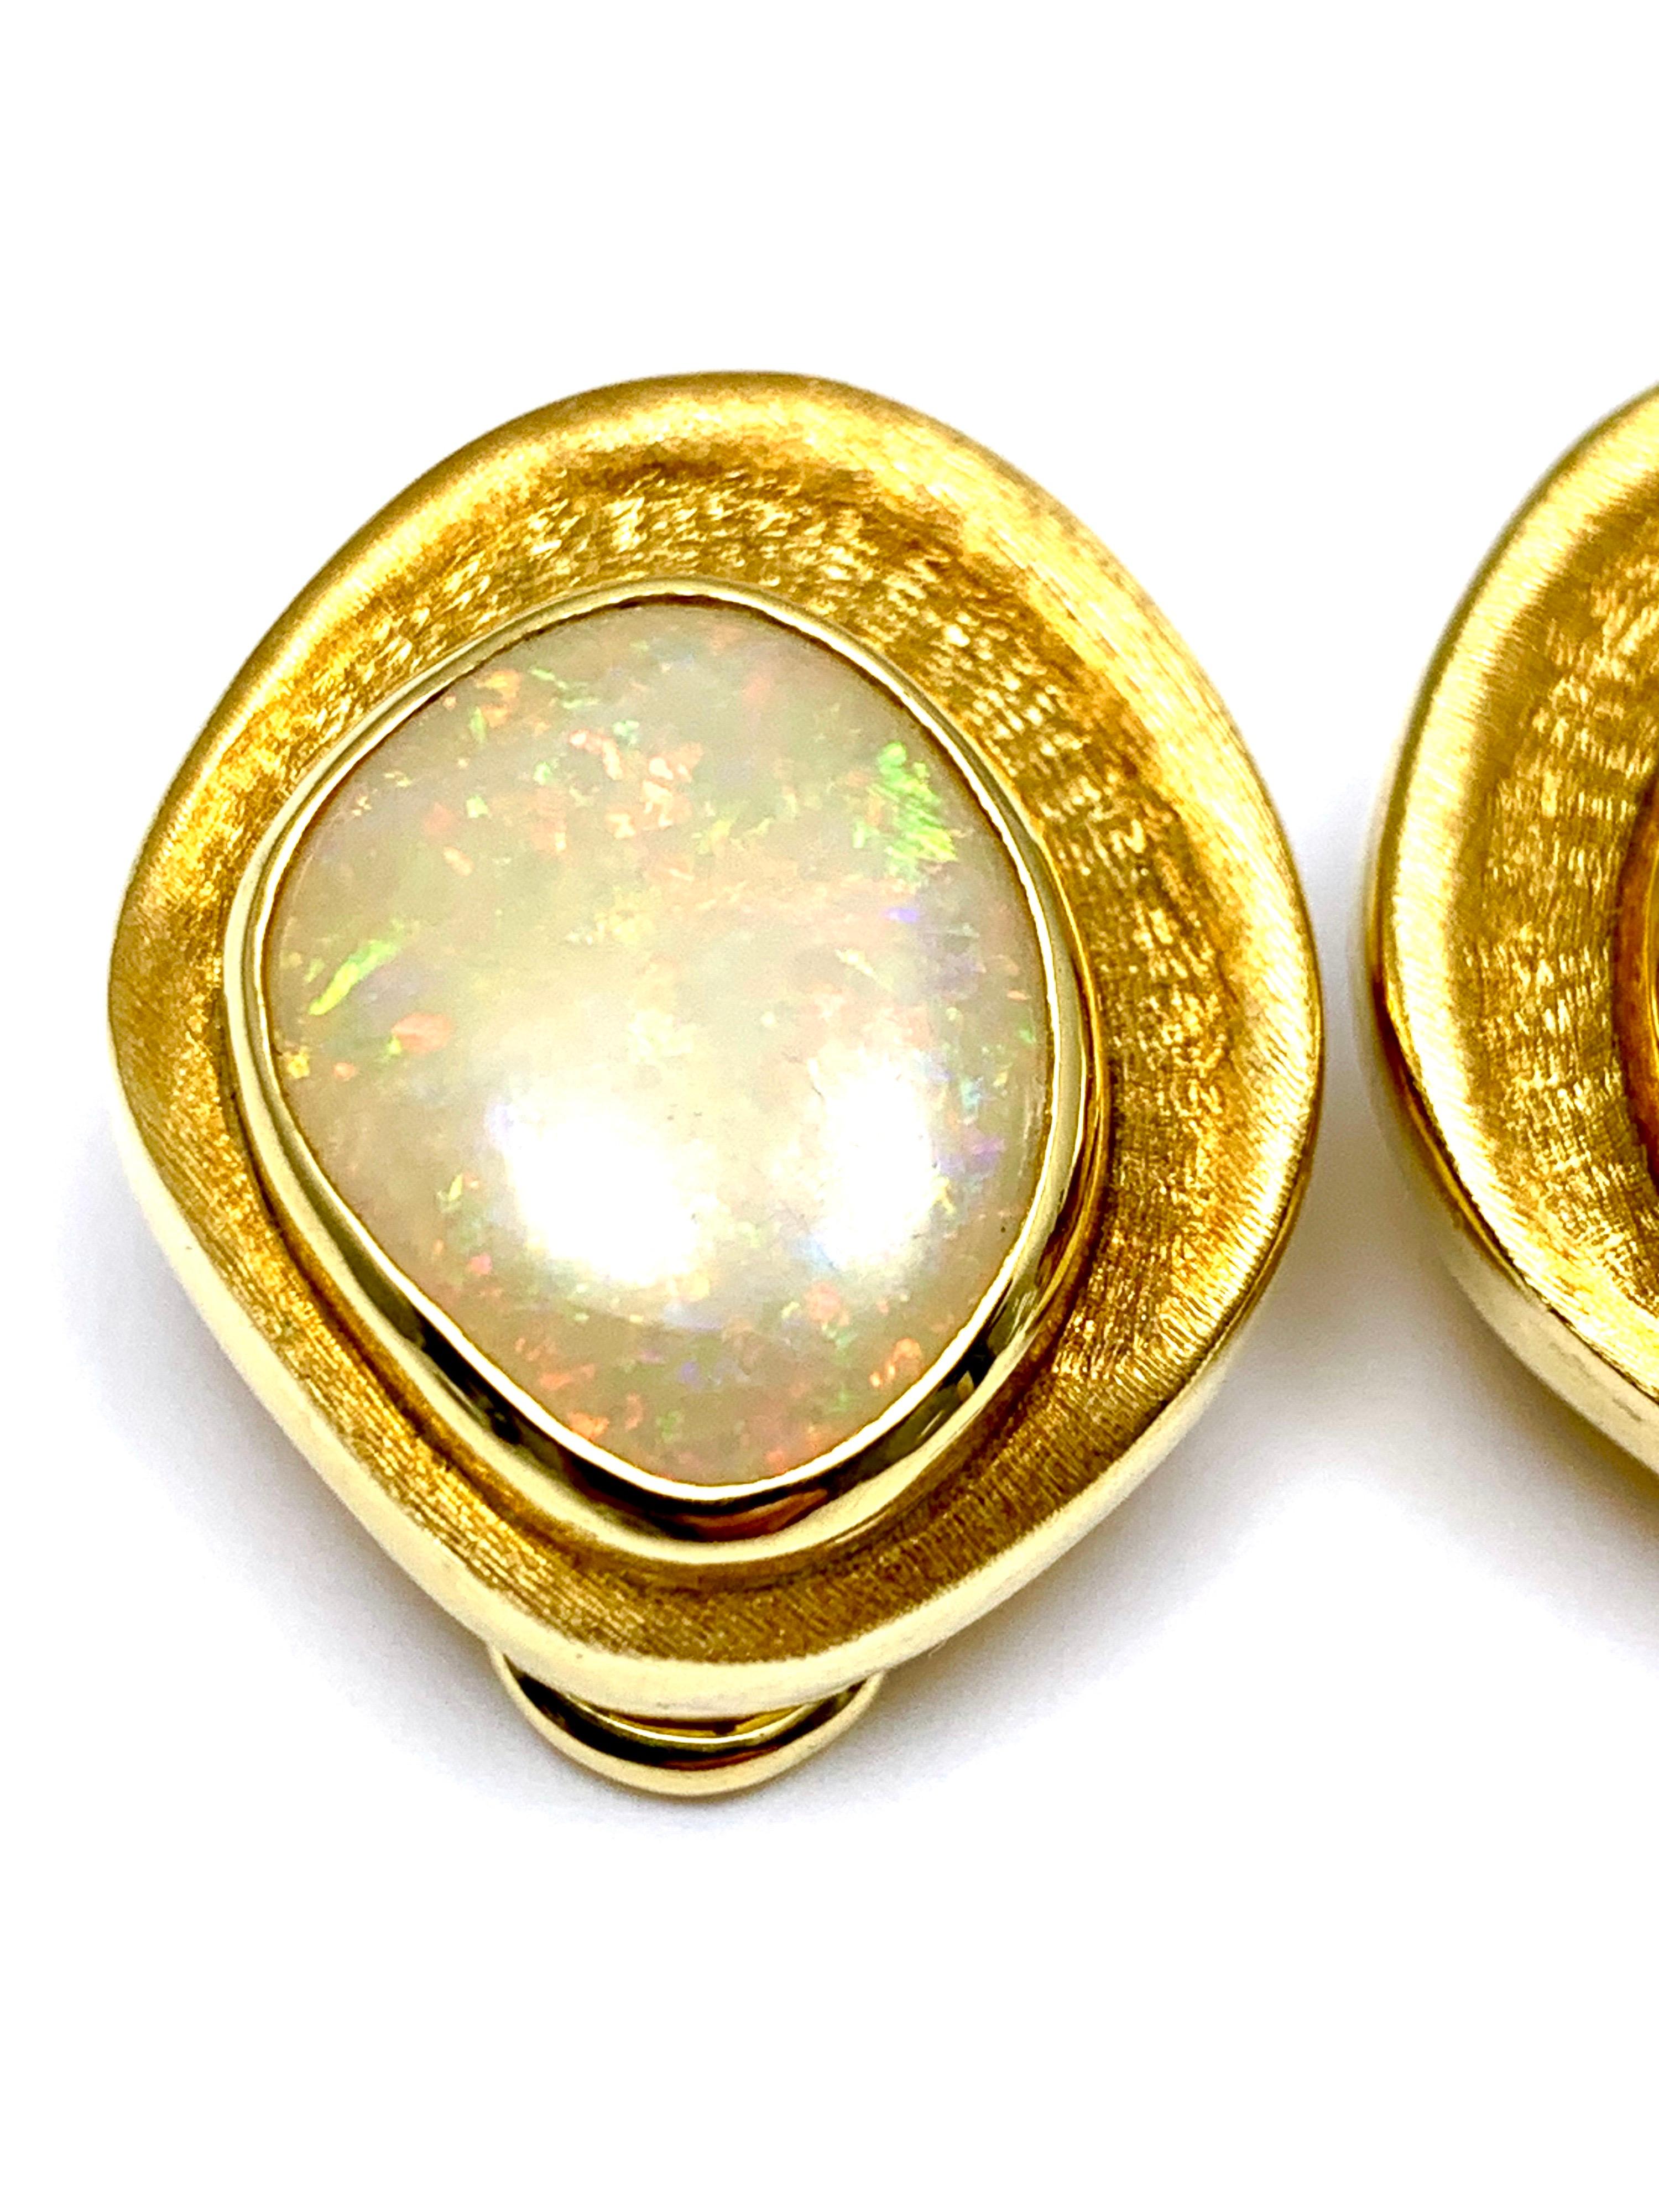 Burle Marx 5.97 Carat Cabochon White Opal and 18 Karat Yellow Gold Earrings 2